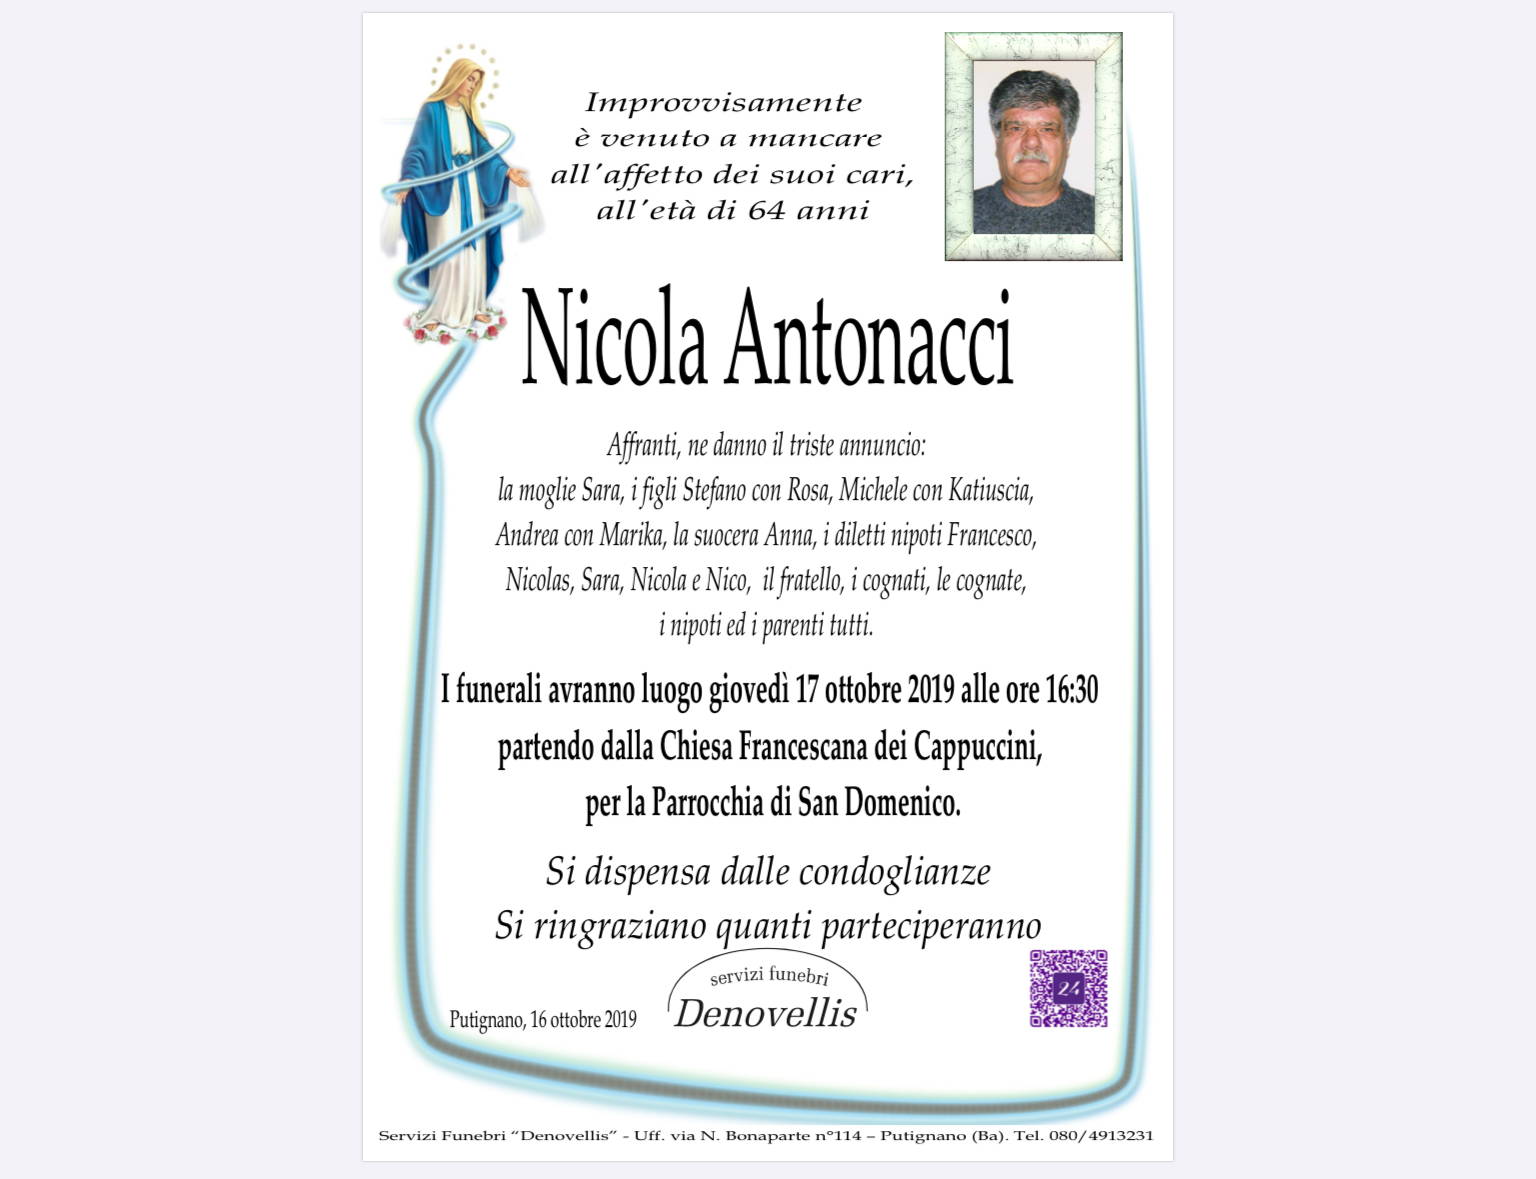 Nicola Antonacci